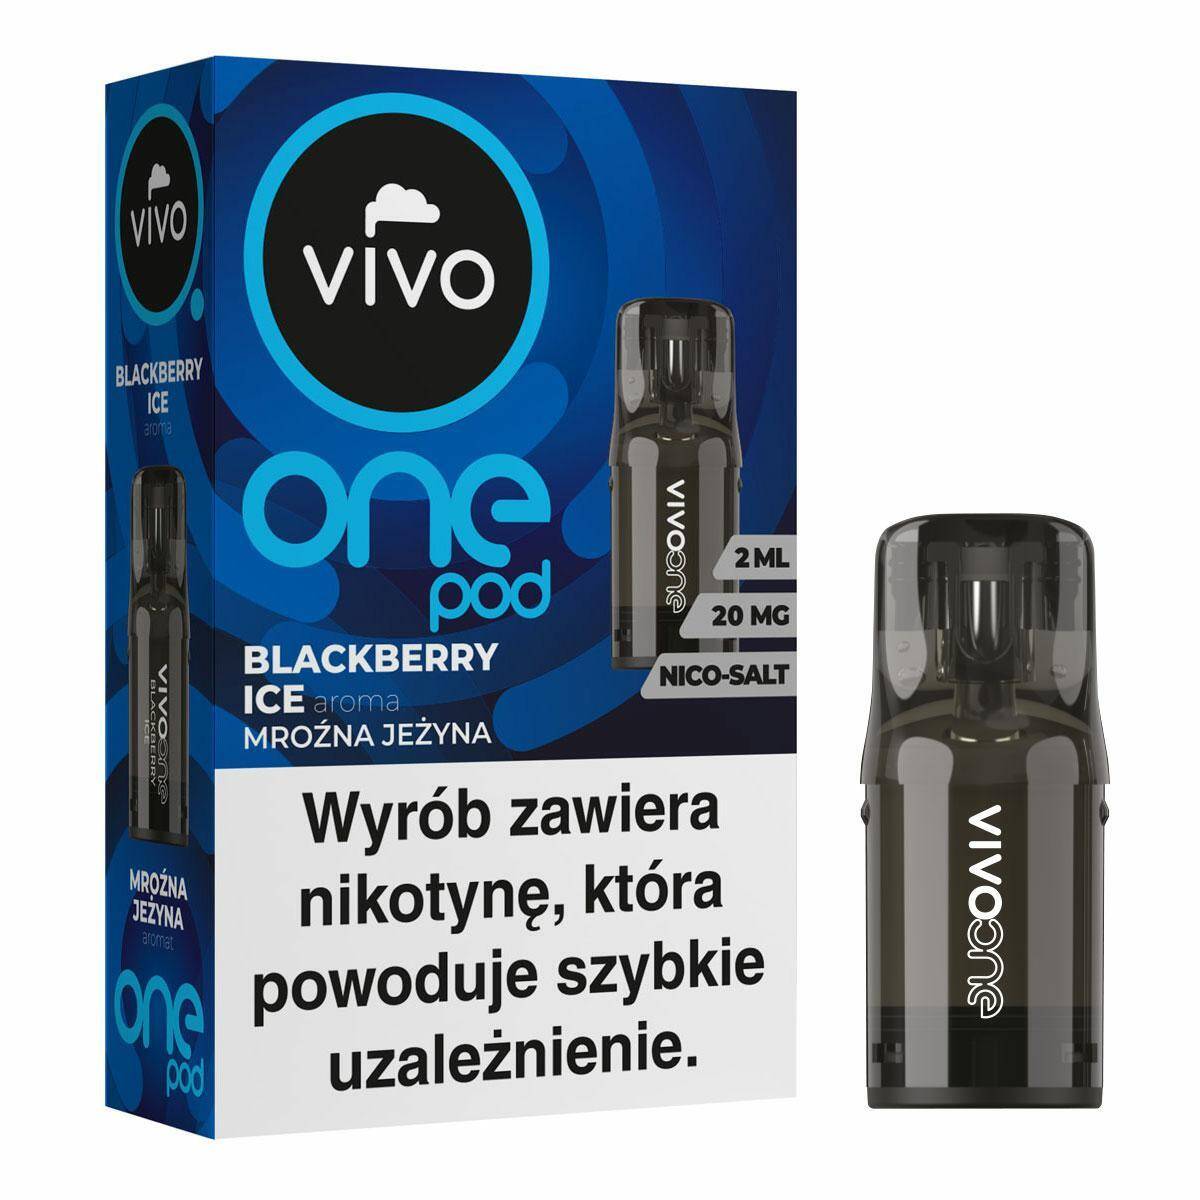 VIVO ONE POD - Blackberry Ice 20mg (2ml)